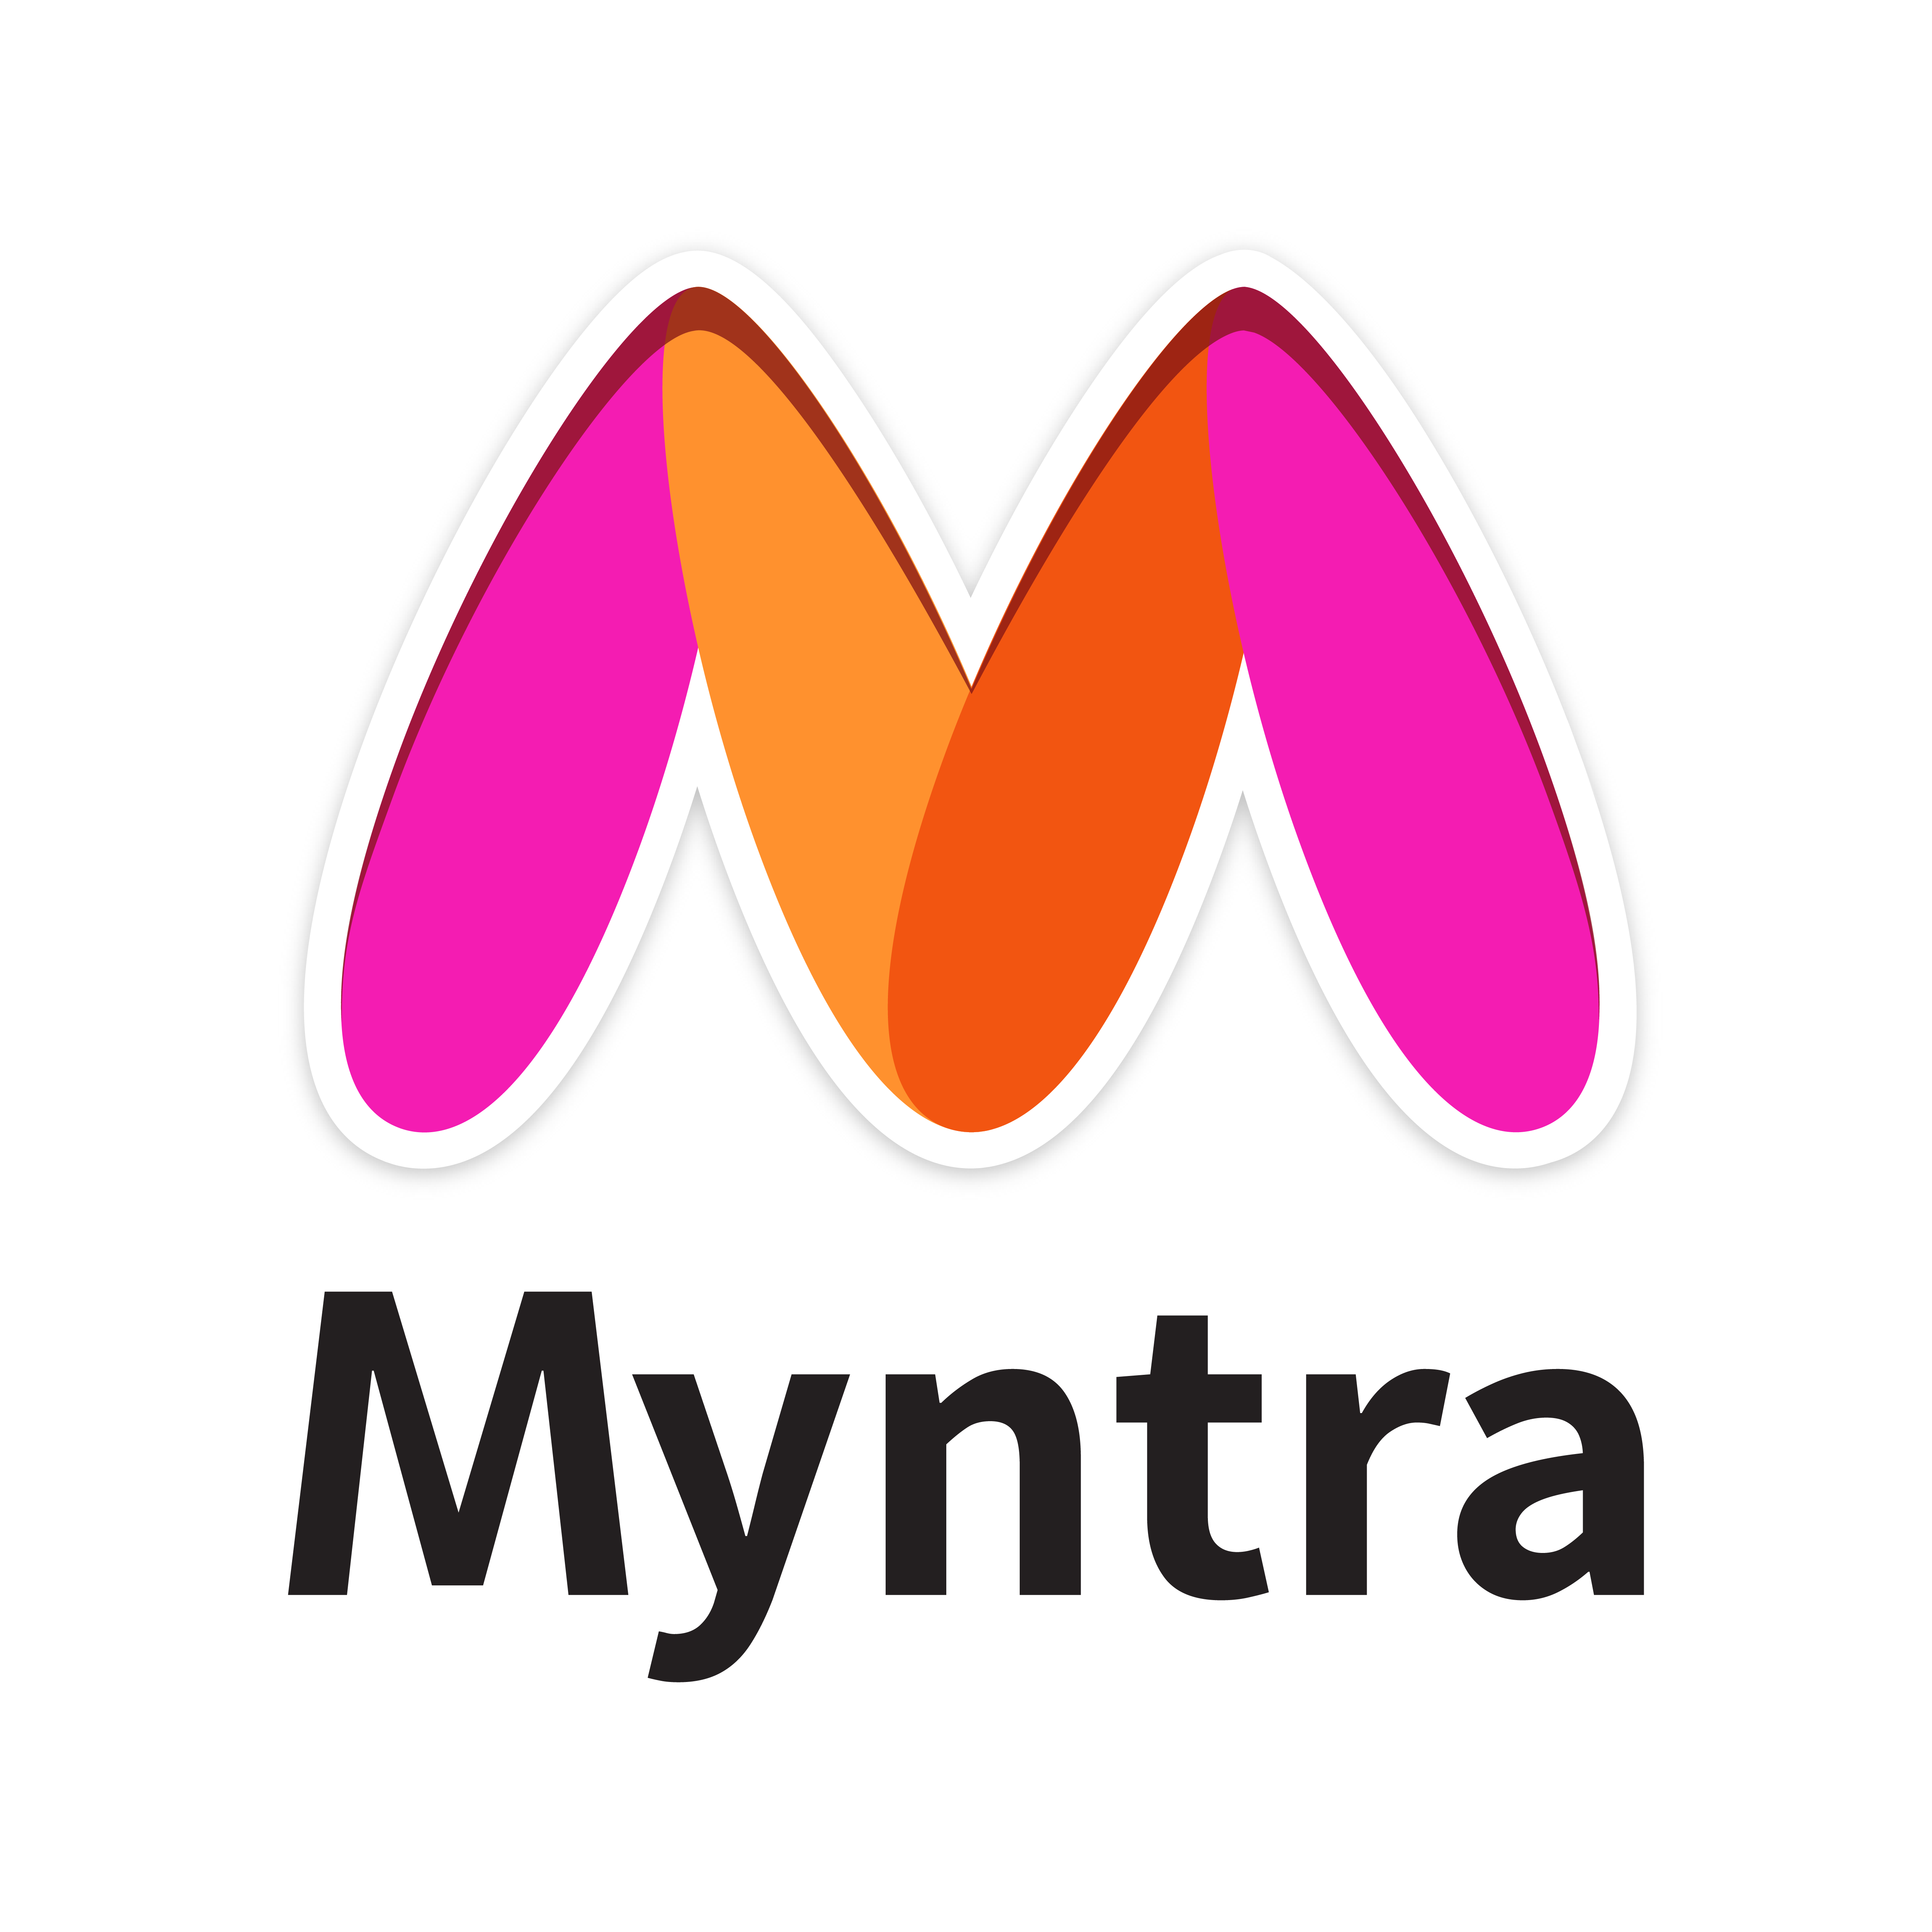 Myntra-logo.png